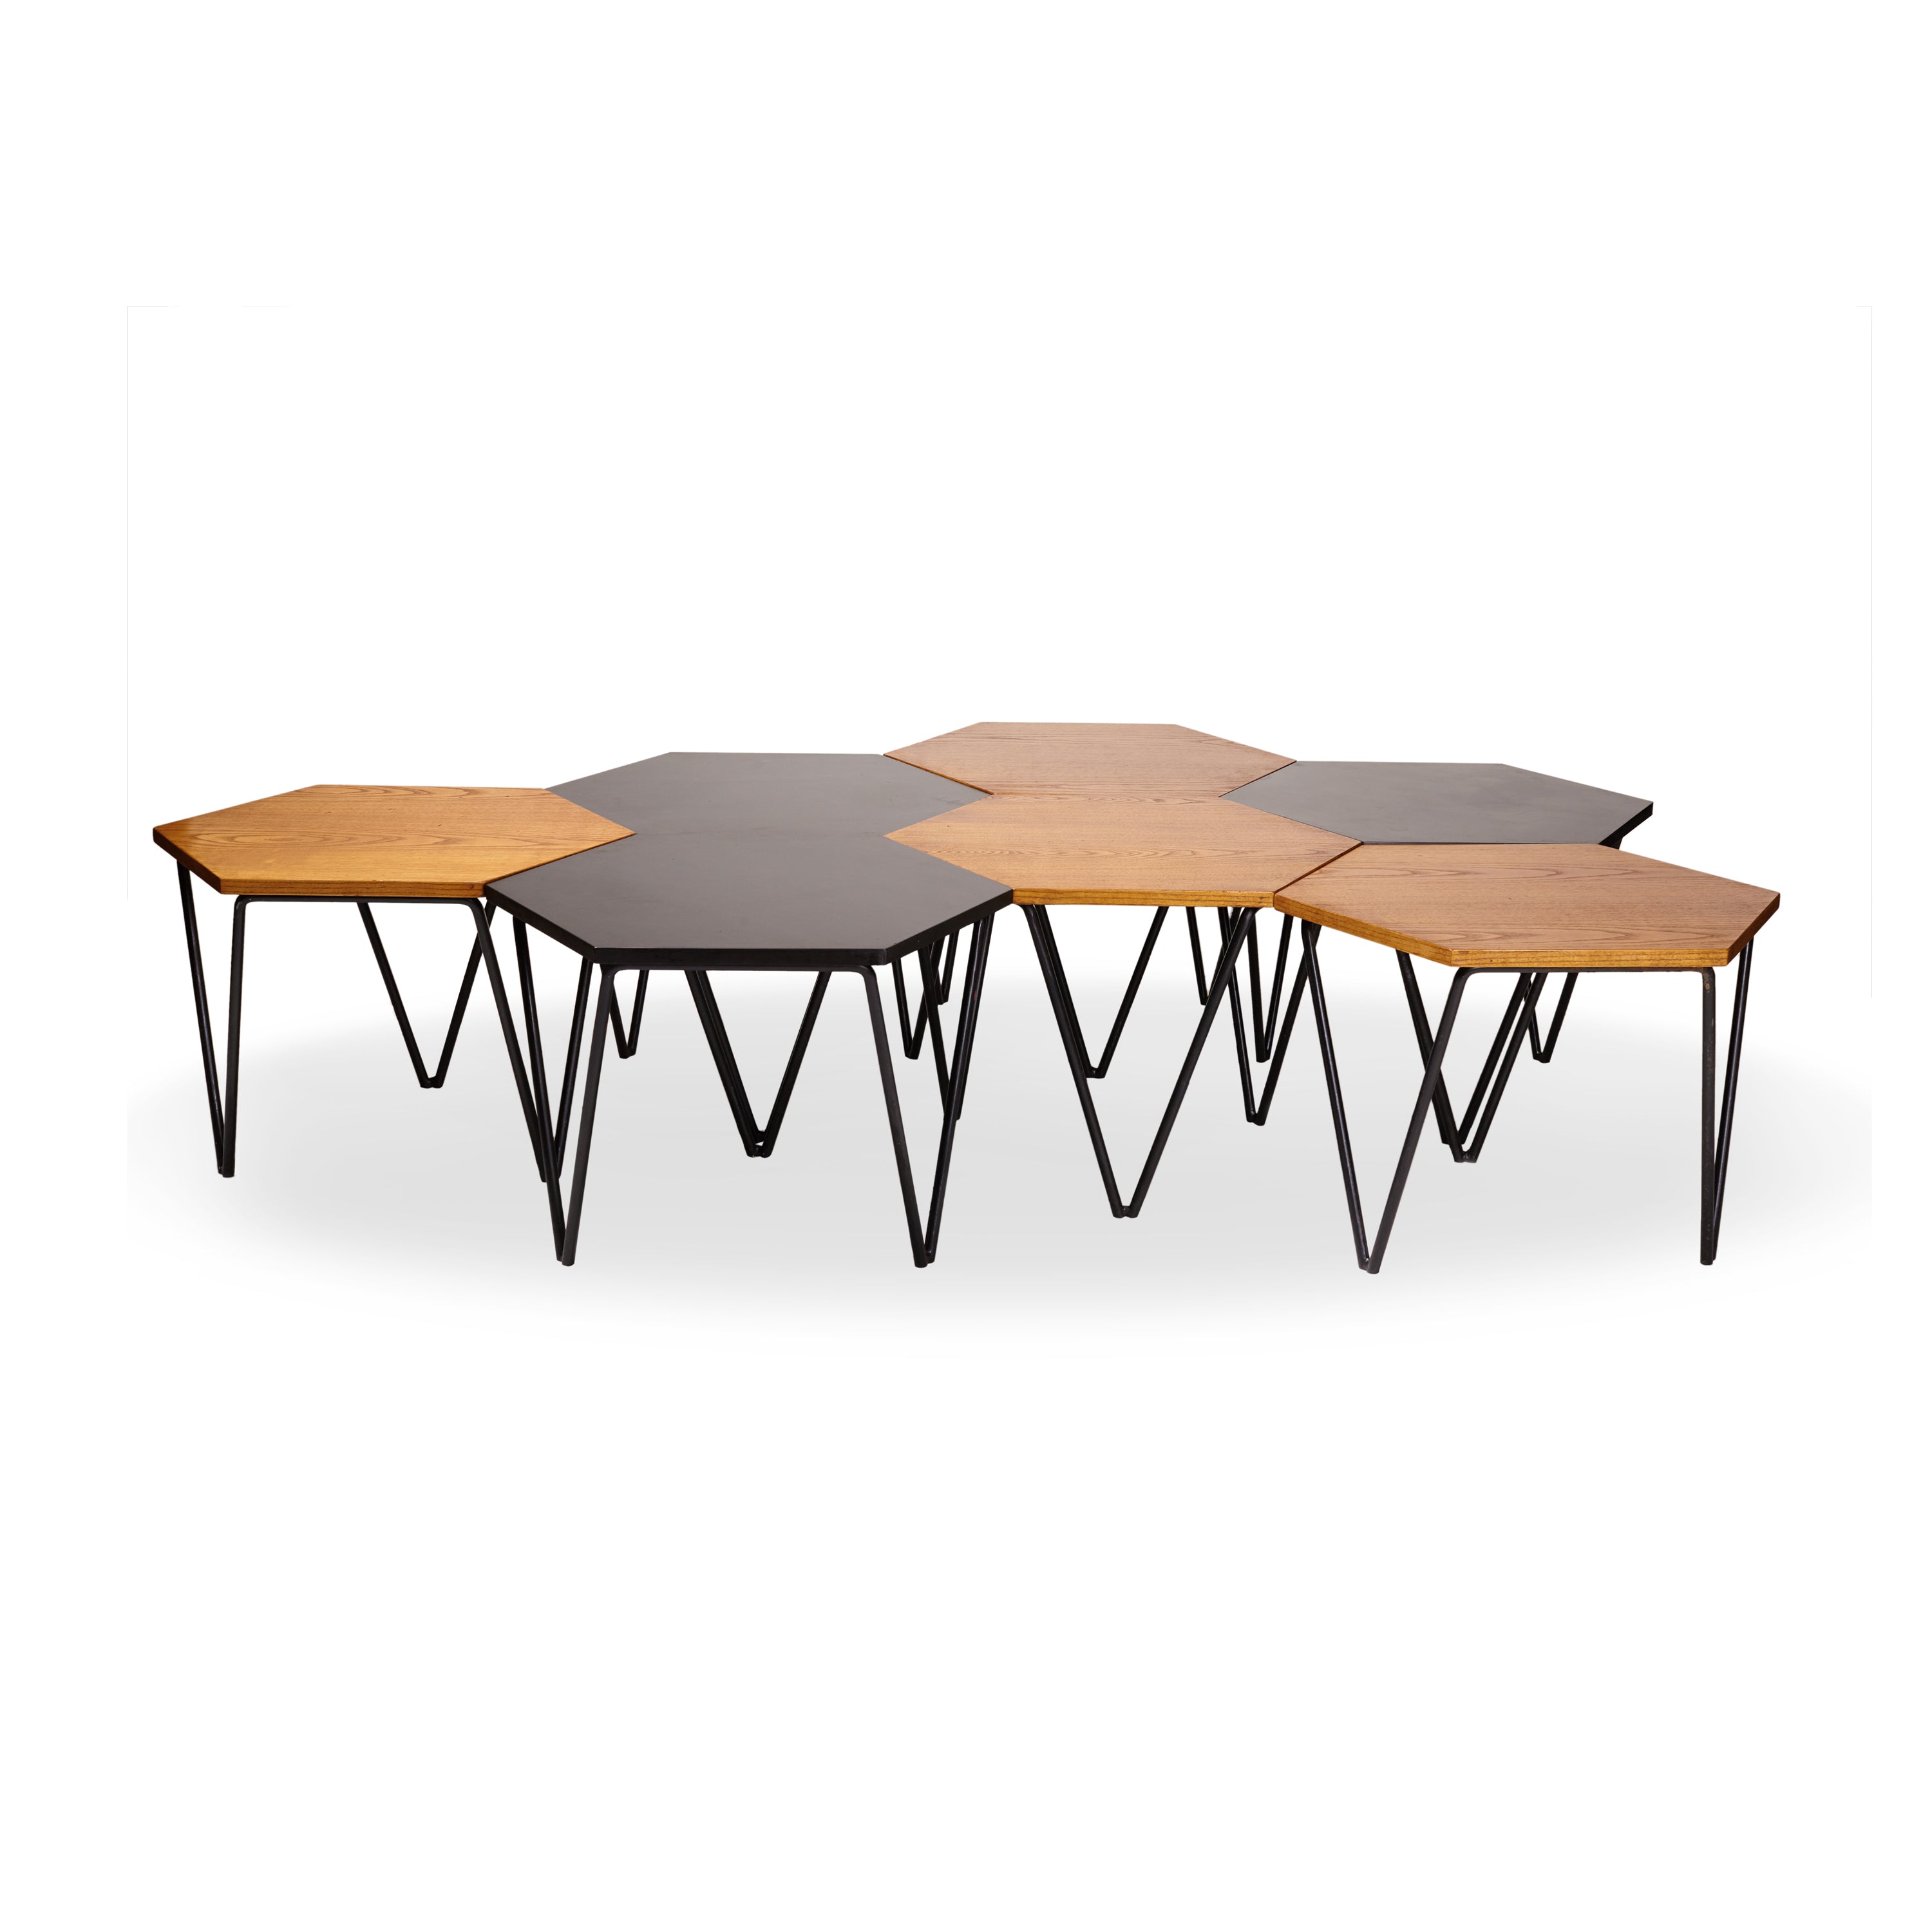 A Set of 7 Low Tables, Gio Ponti, 1950s - ONEROOM